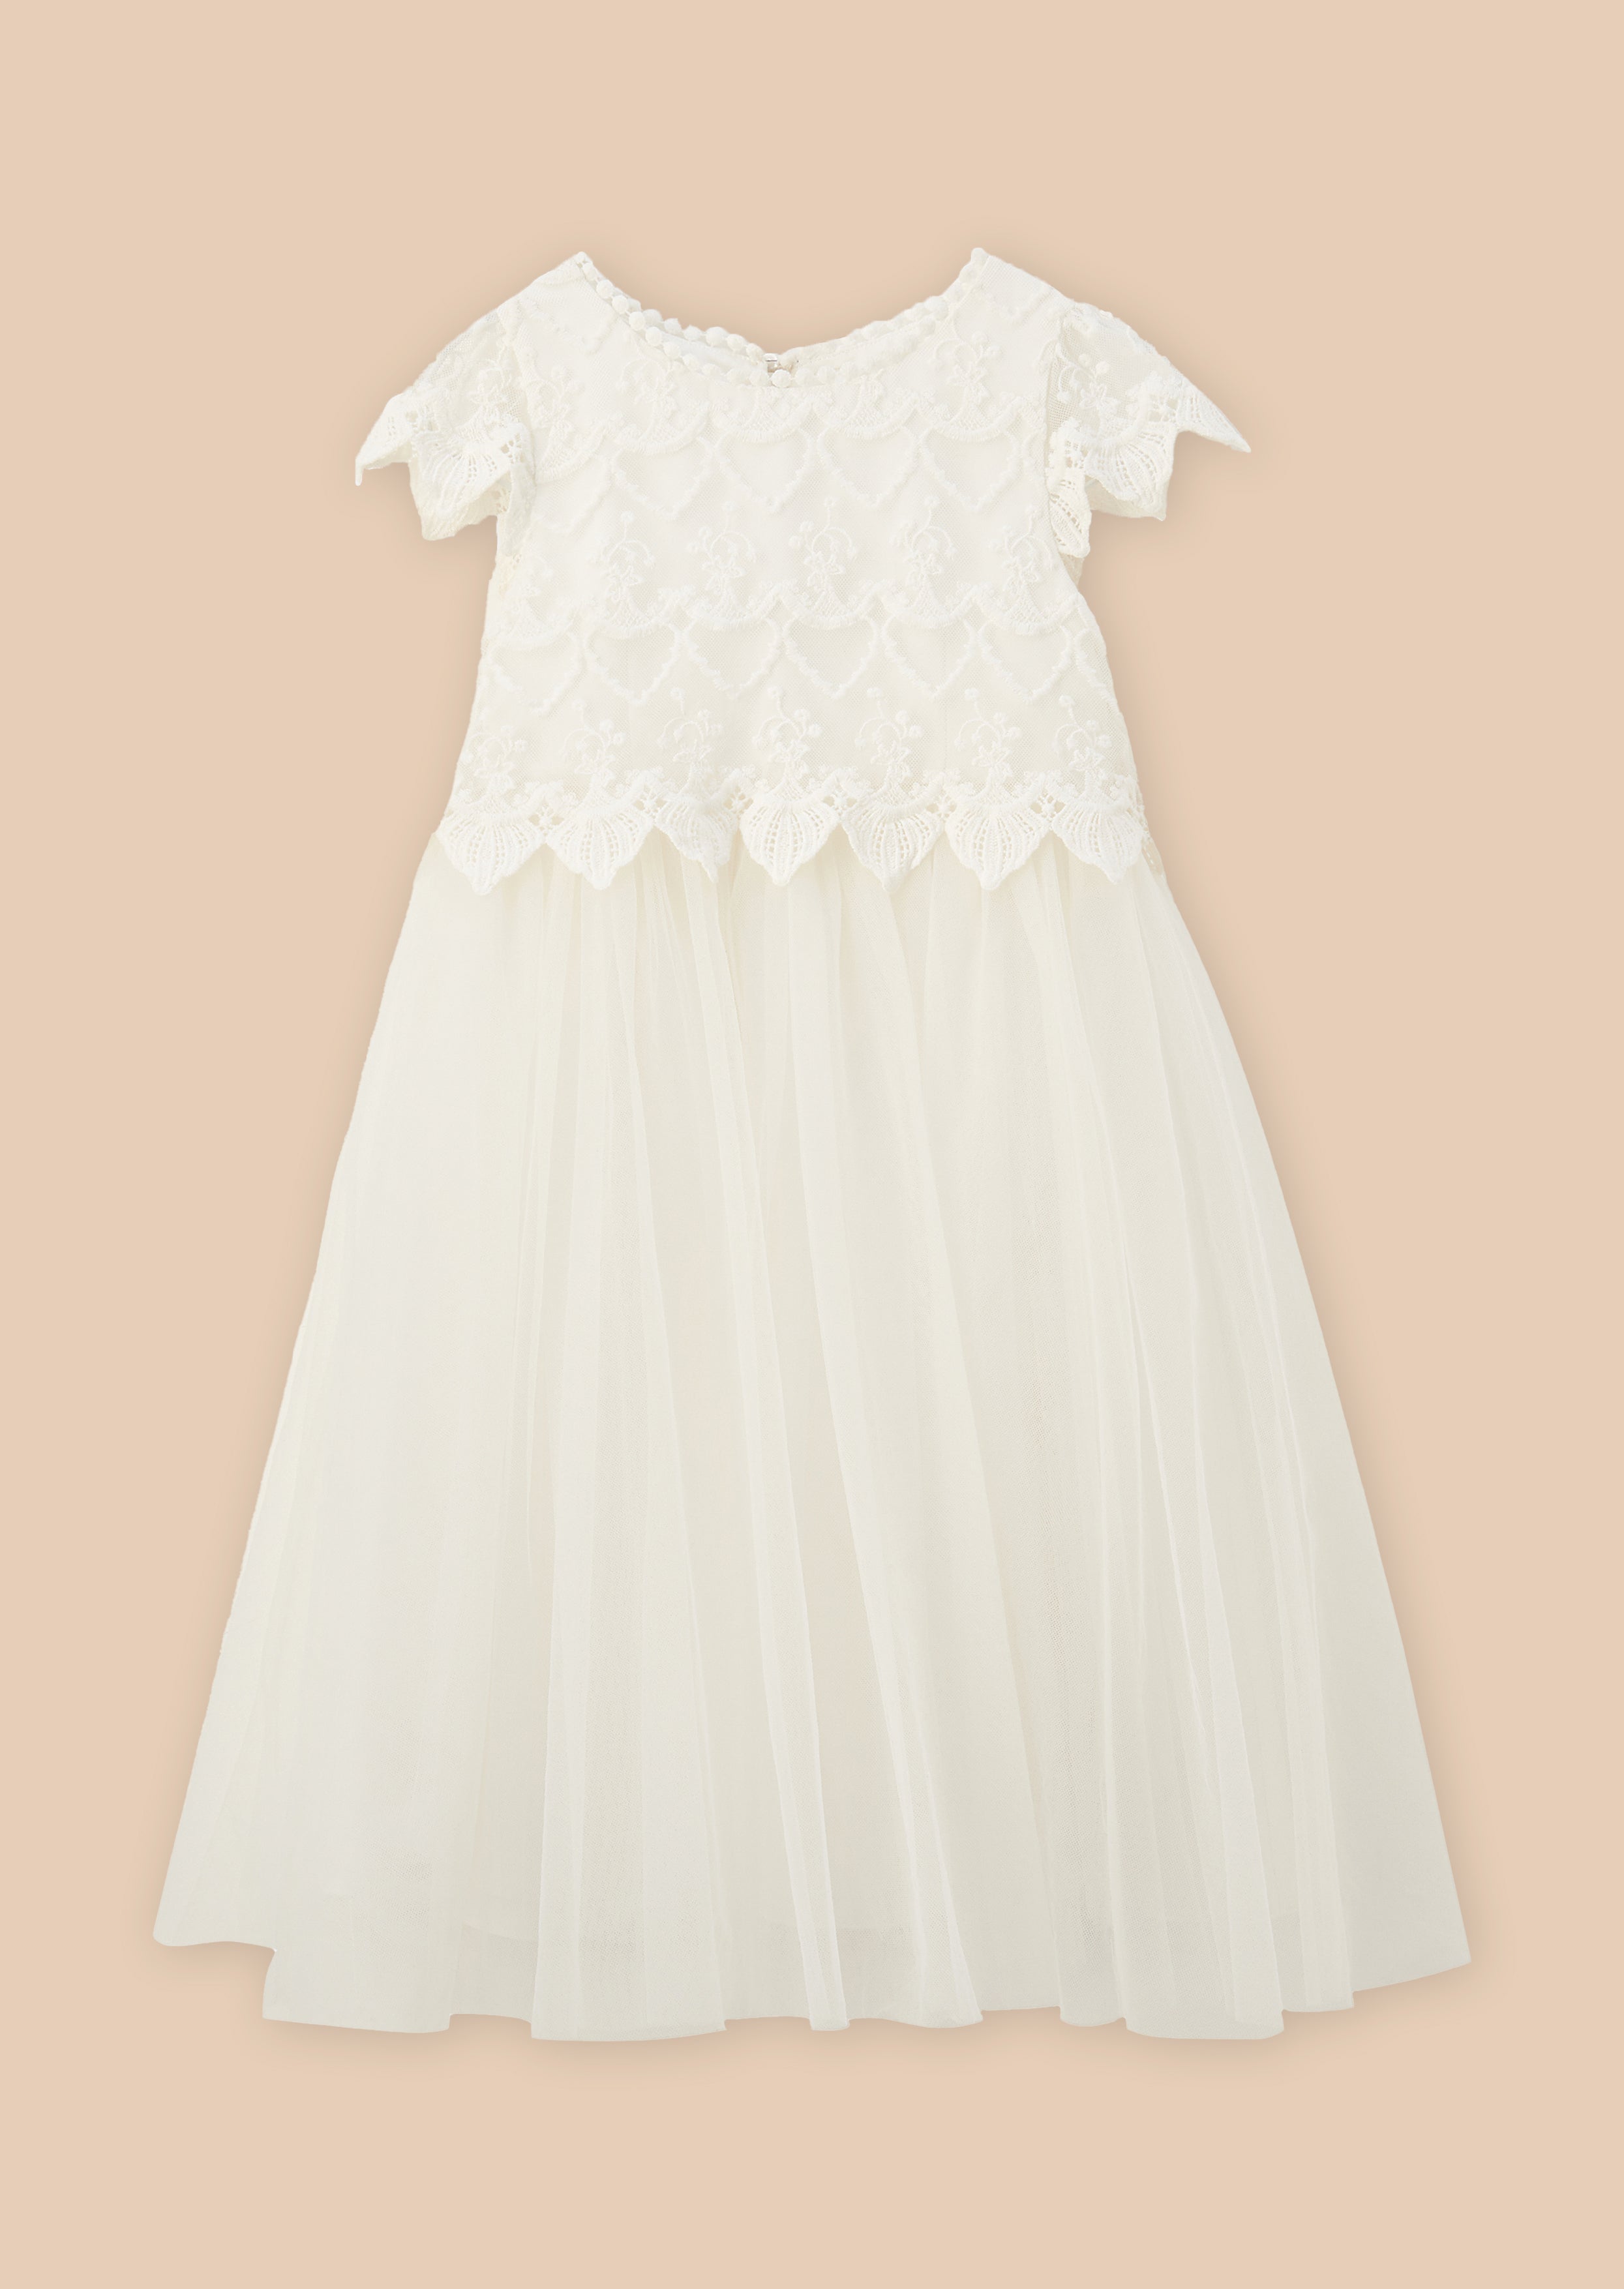 Girls Lucy Lace Bodice White Dress